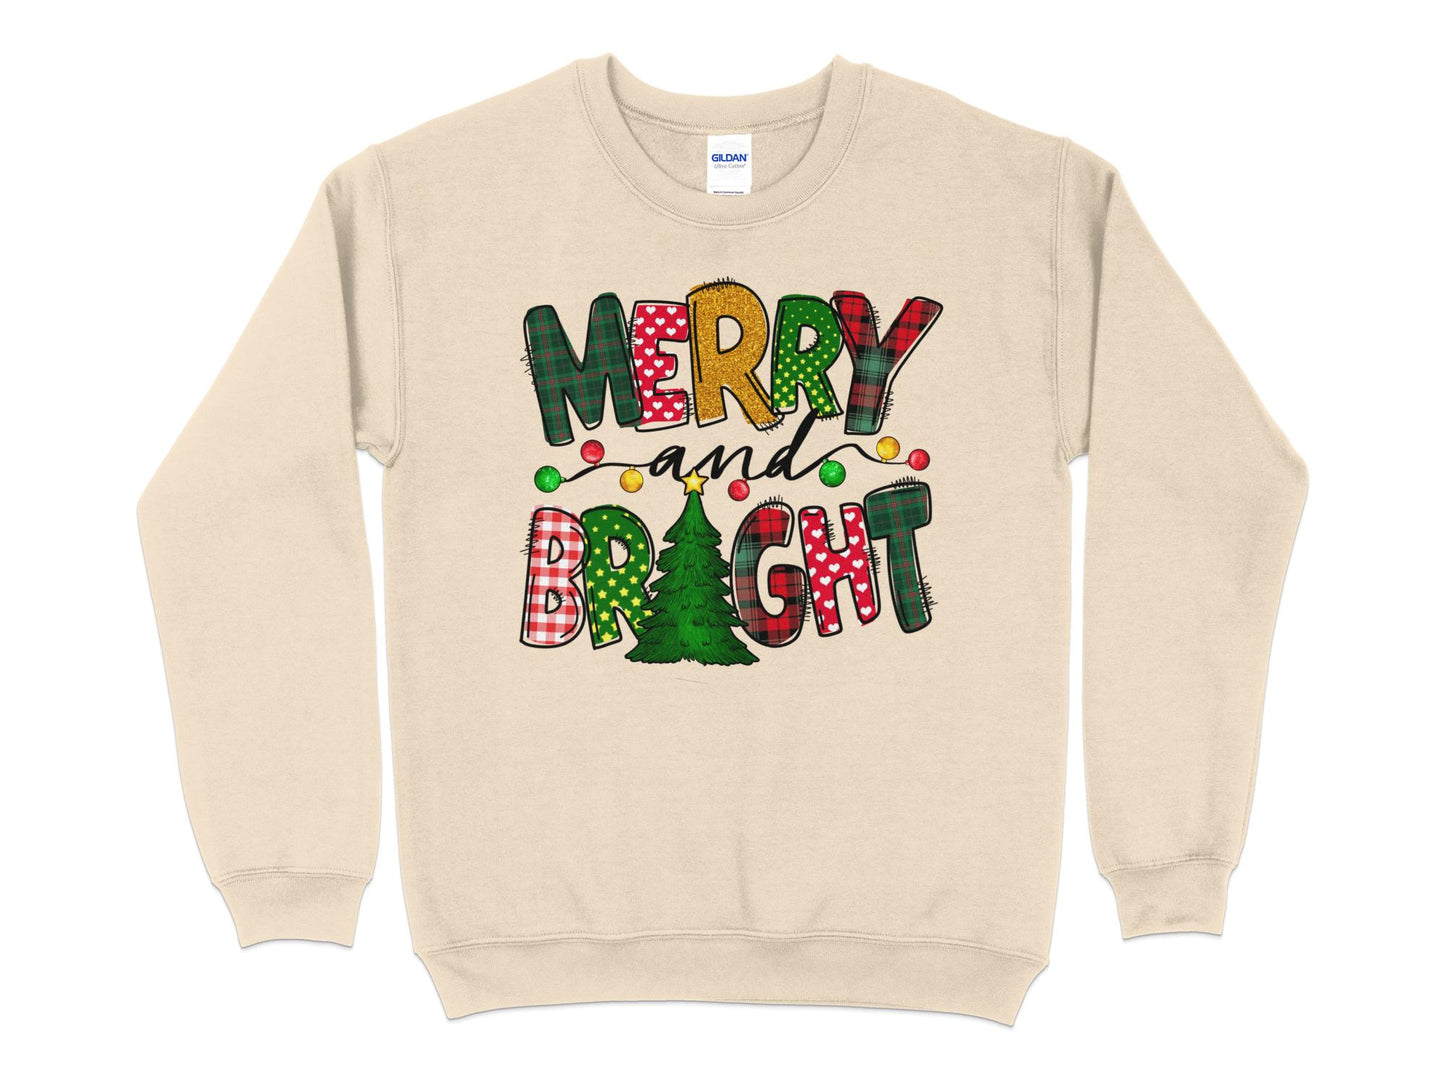 Merry and Bright Sweatshirt, Merry Christmas Shirt for Women, Christmas Crewneck - Mardonyx Sweatshirt Sand / S